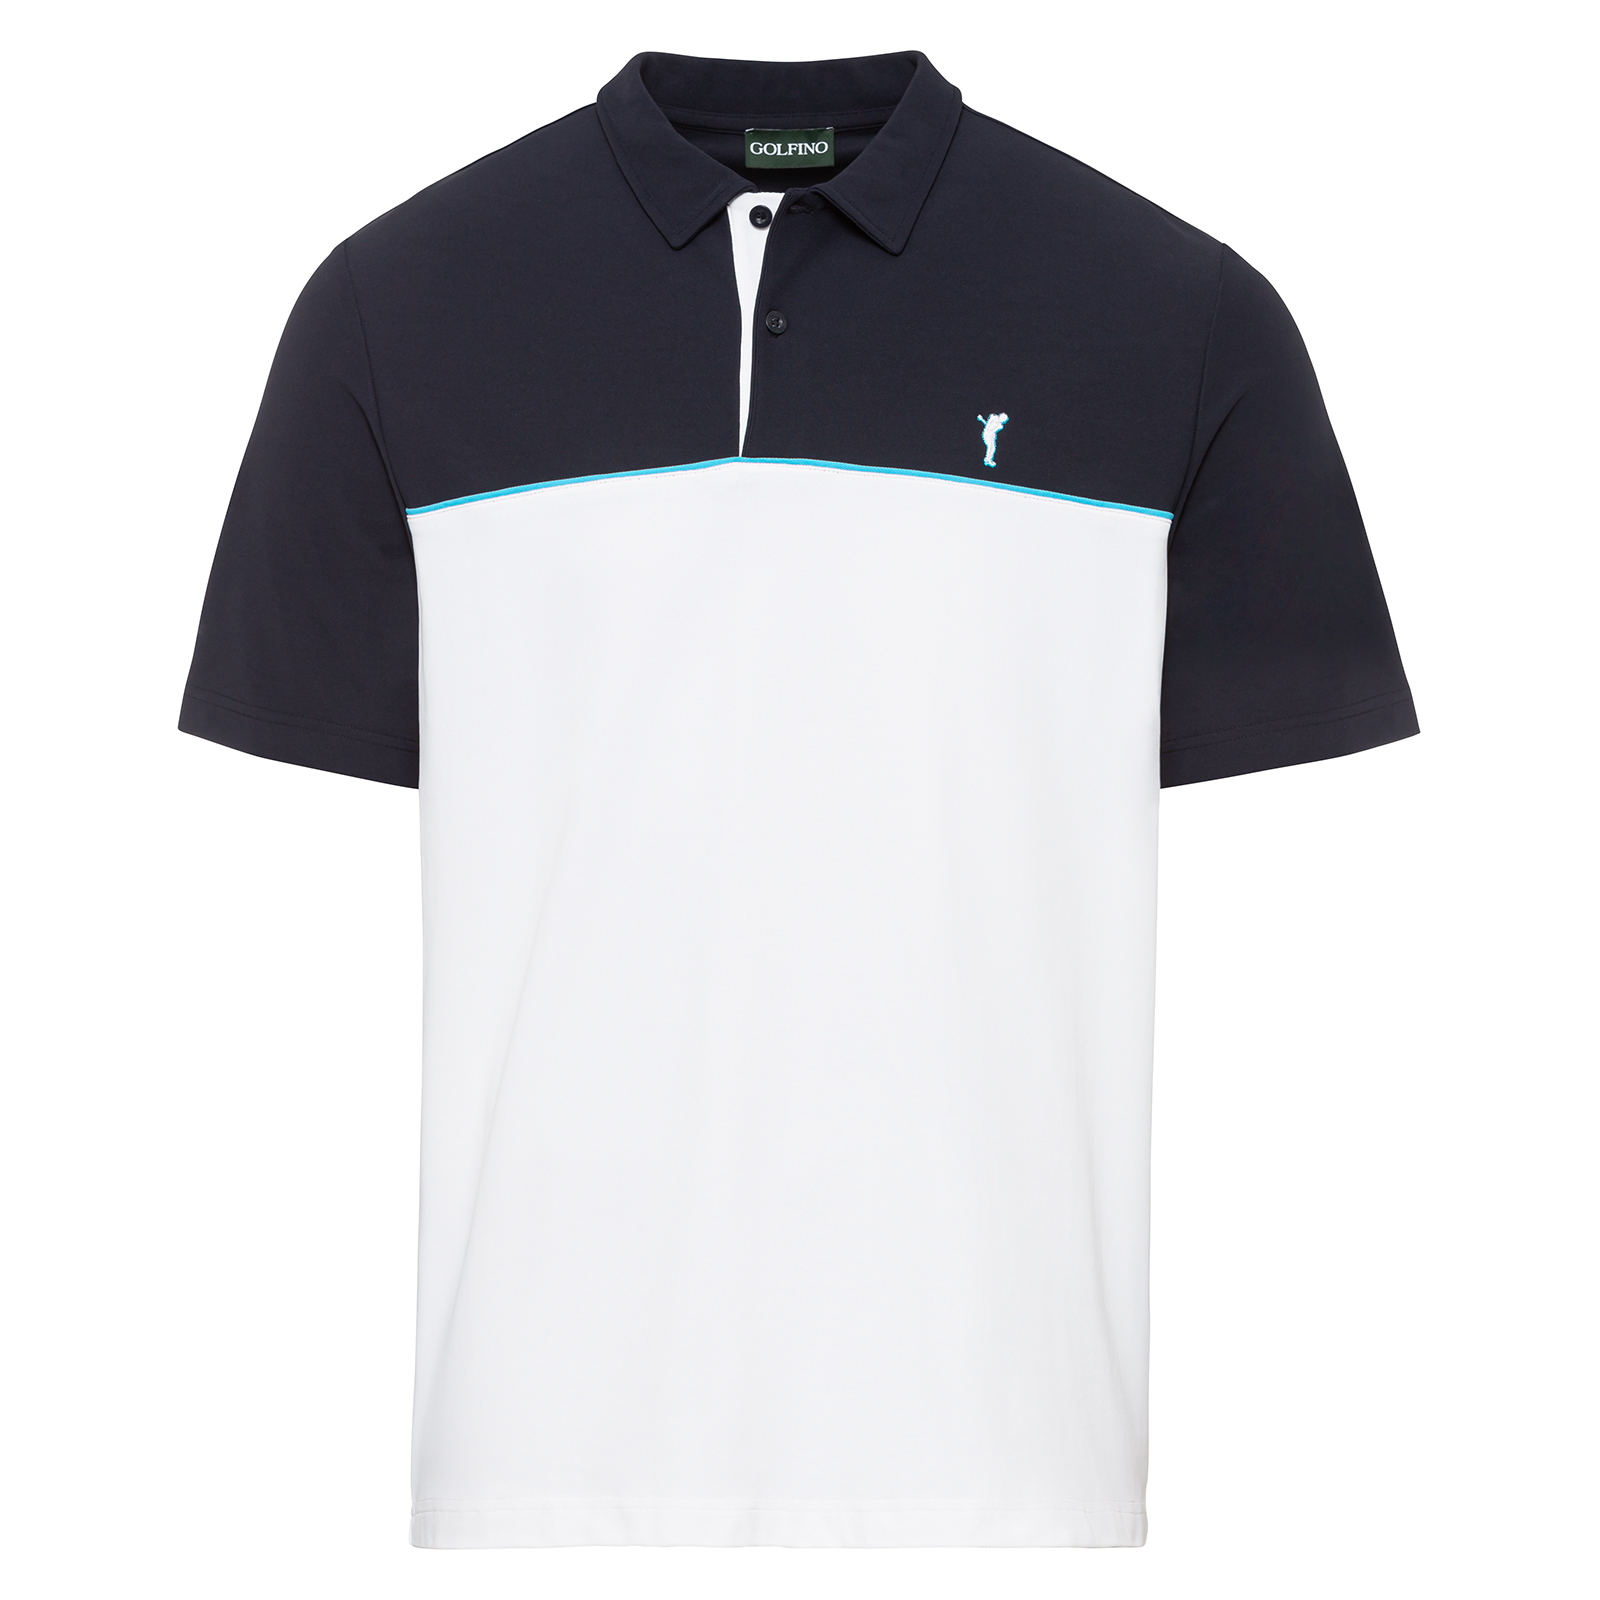 Men's breathable golf polo shirt 